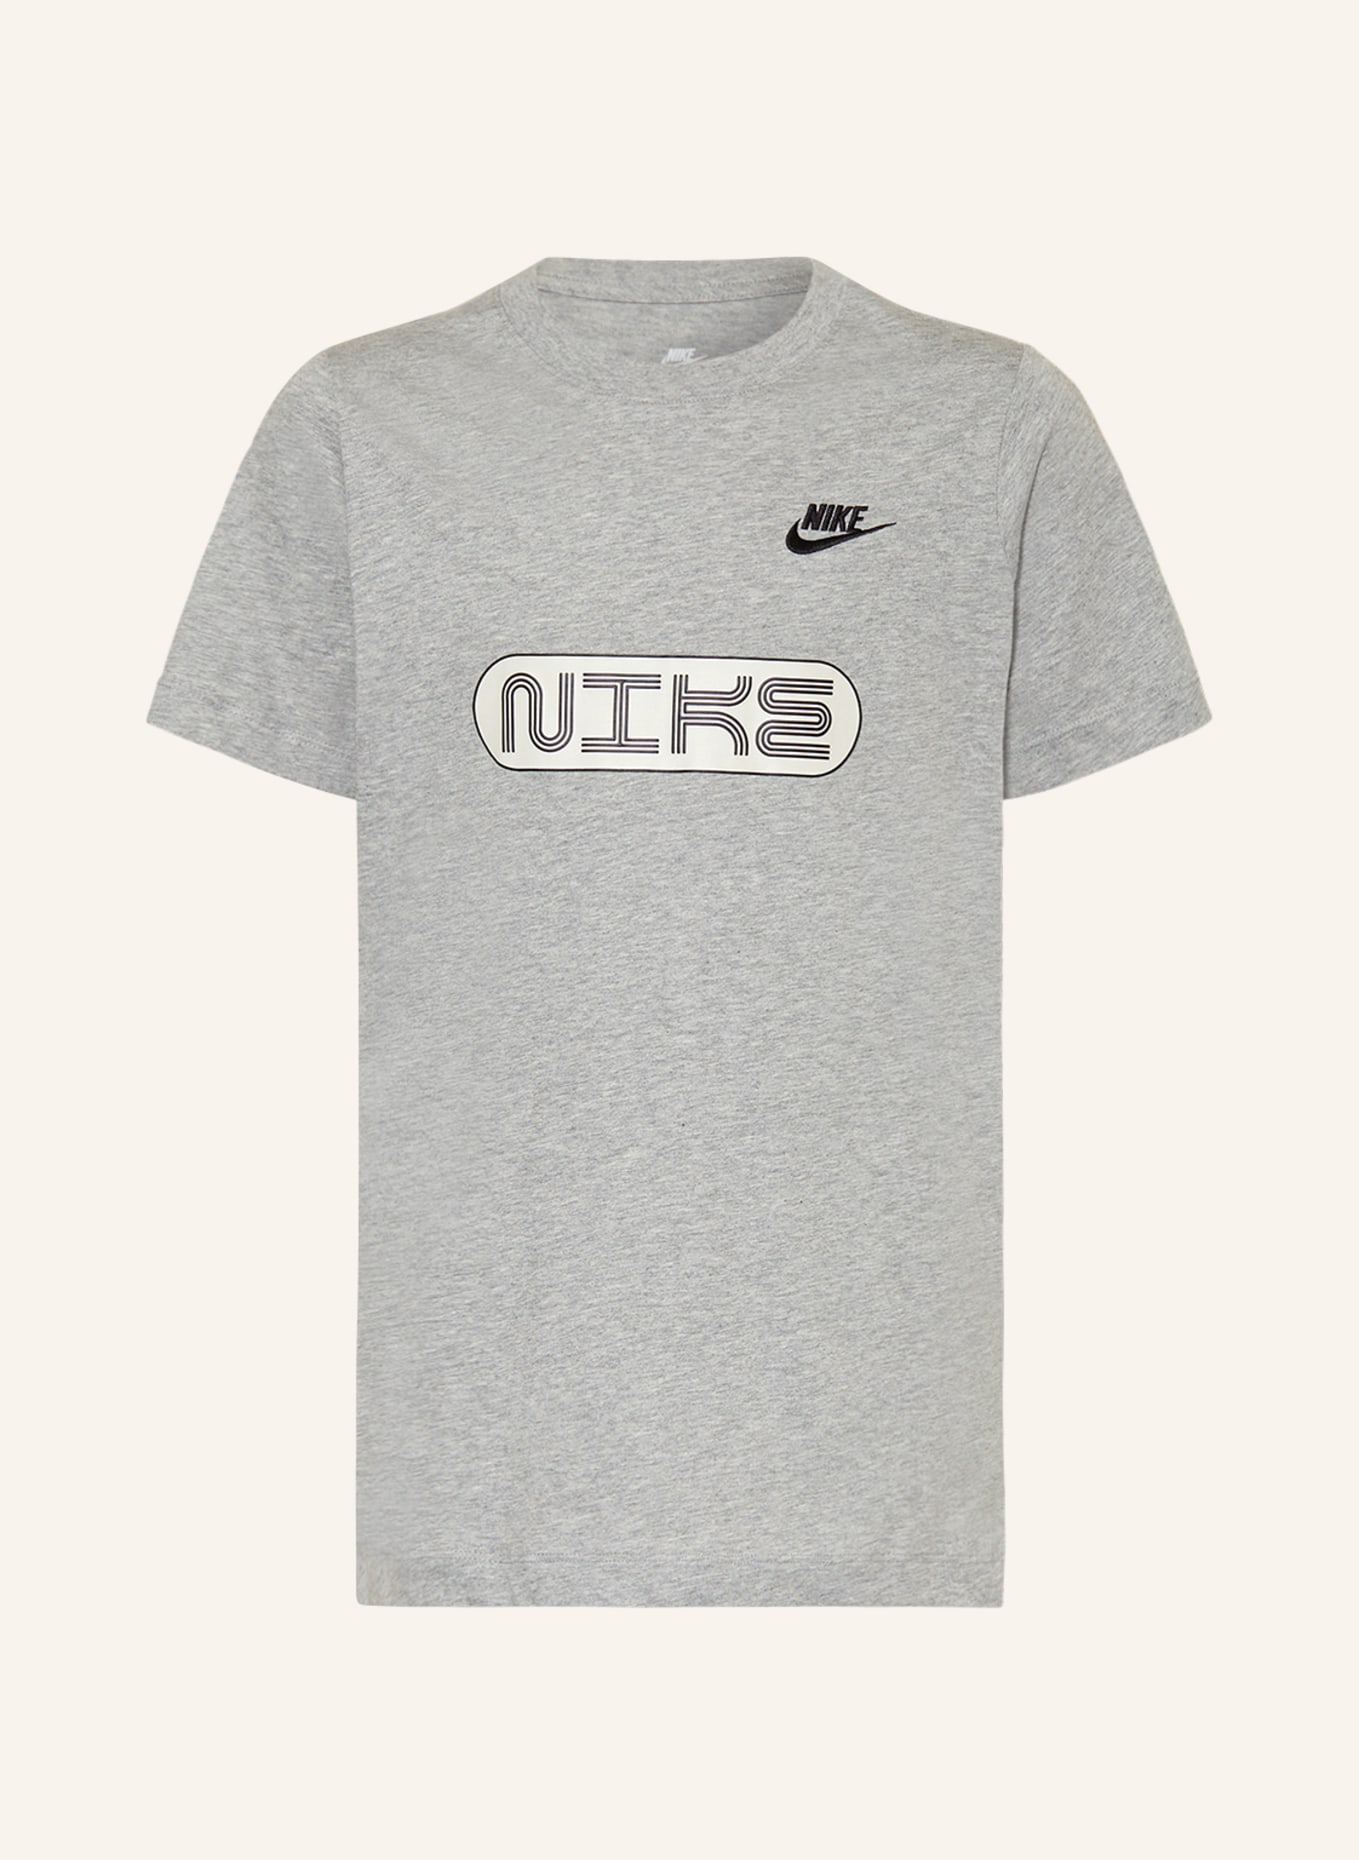 Nike T-Shirt AMPLIFY, Farbe: GRAU/ WEISS/ SCHWARZ (Bild 1)